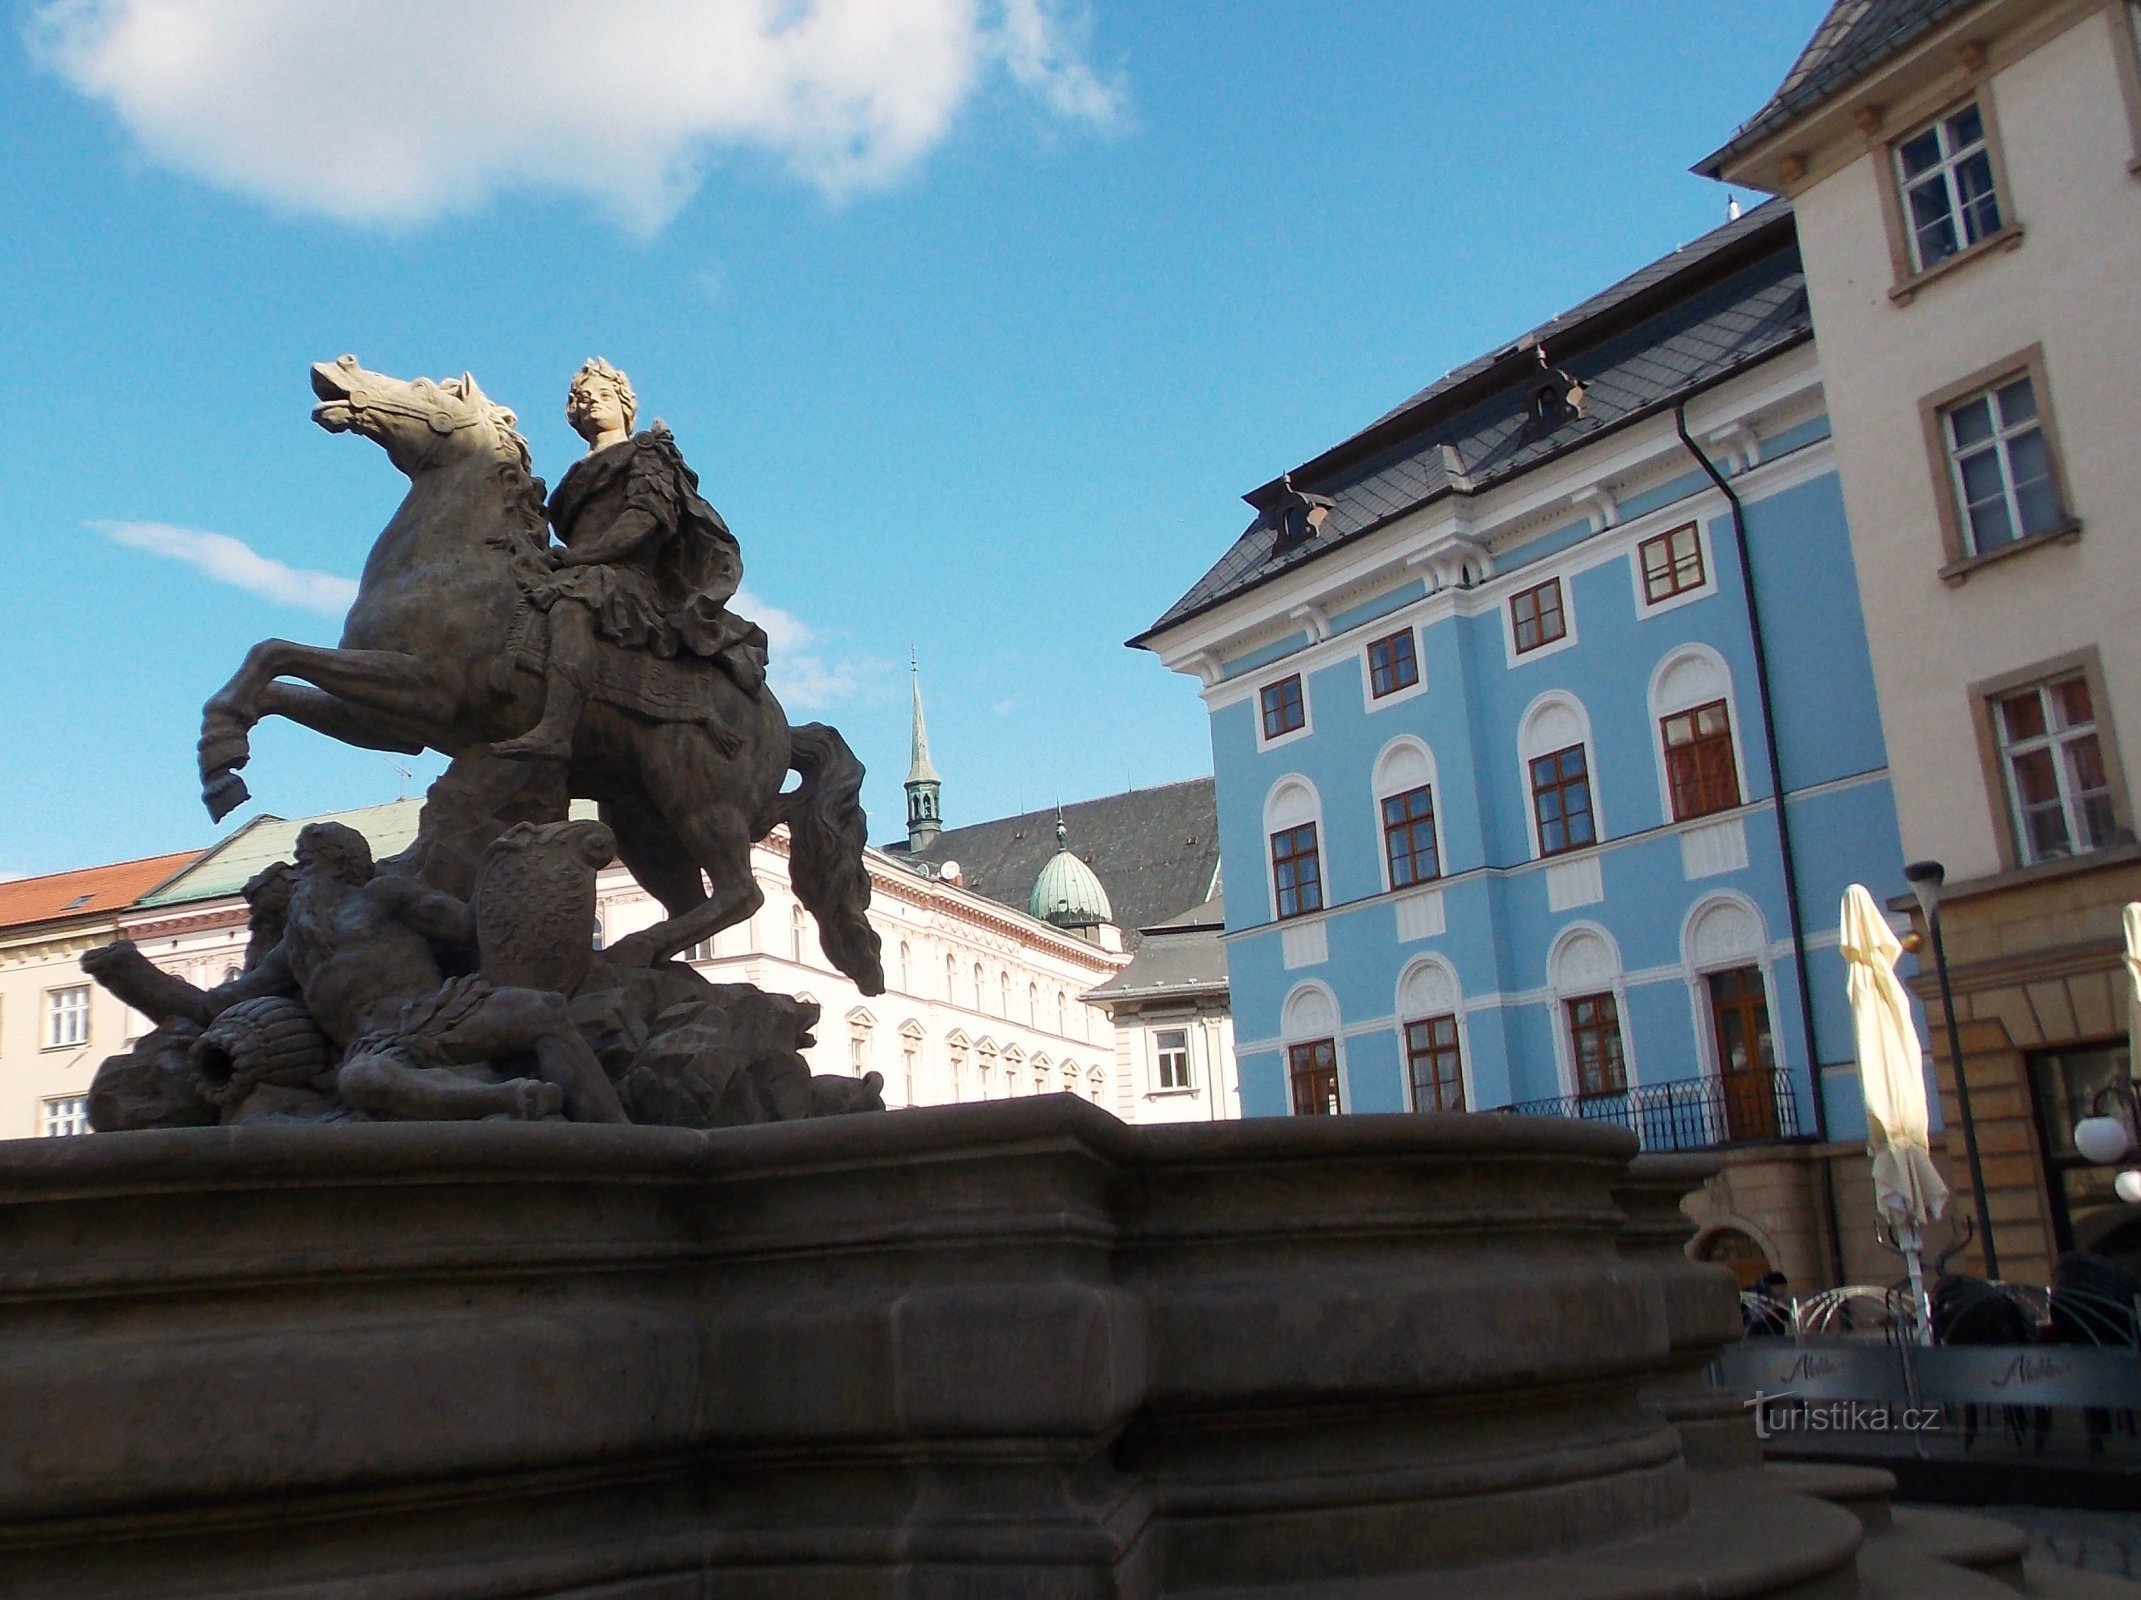 Địa điểm thú vị trên Horní náměstí ở Olomouc